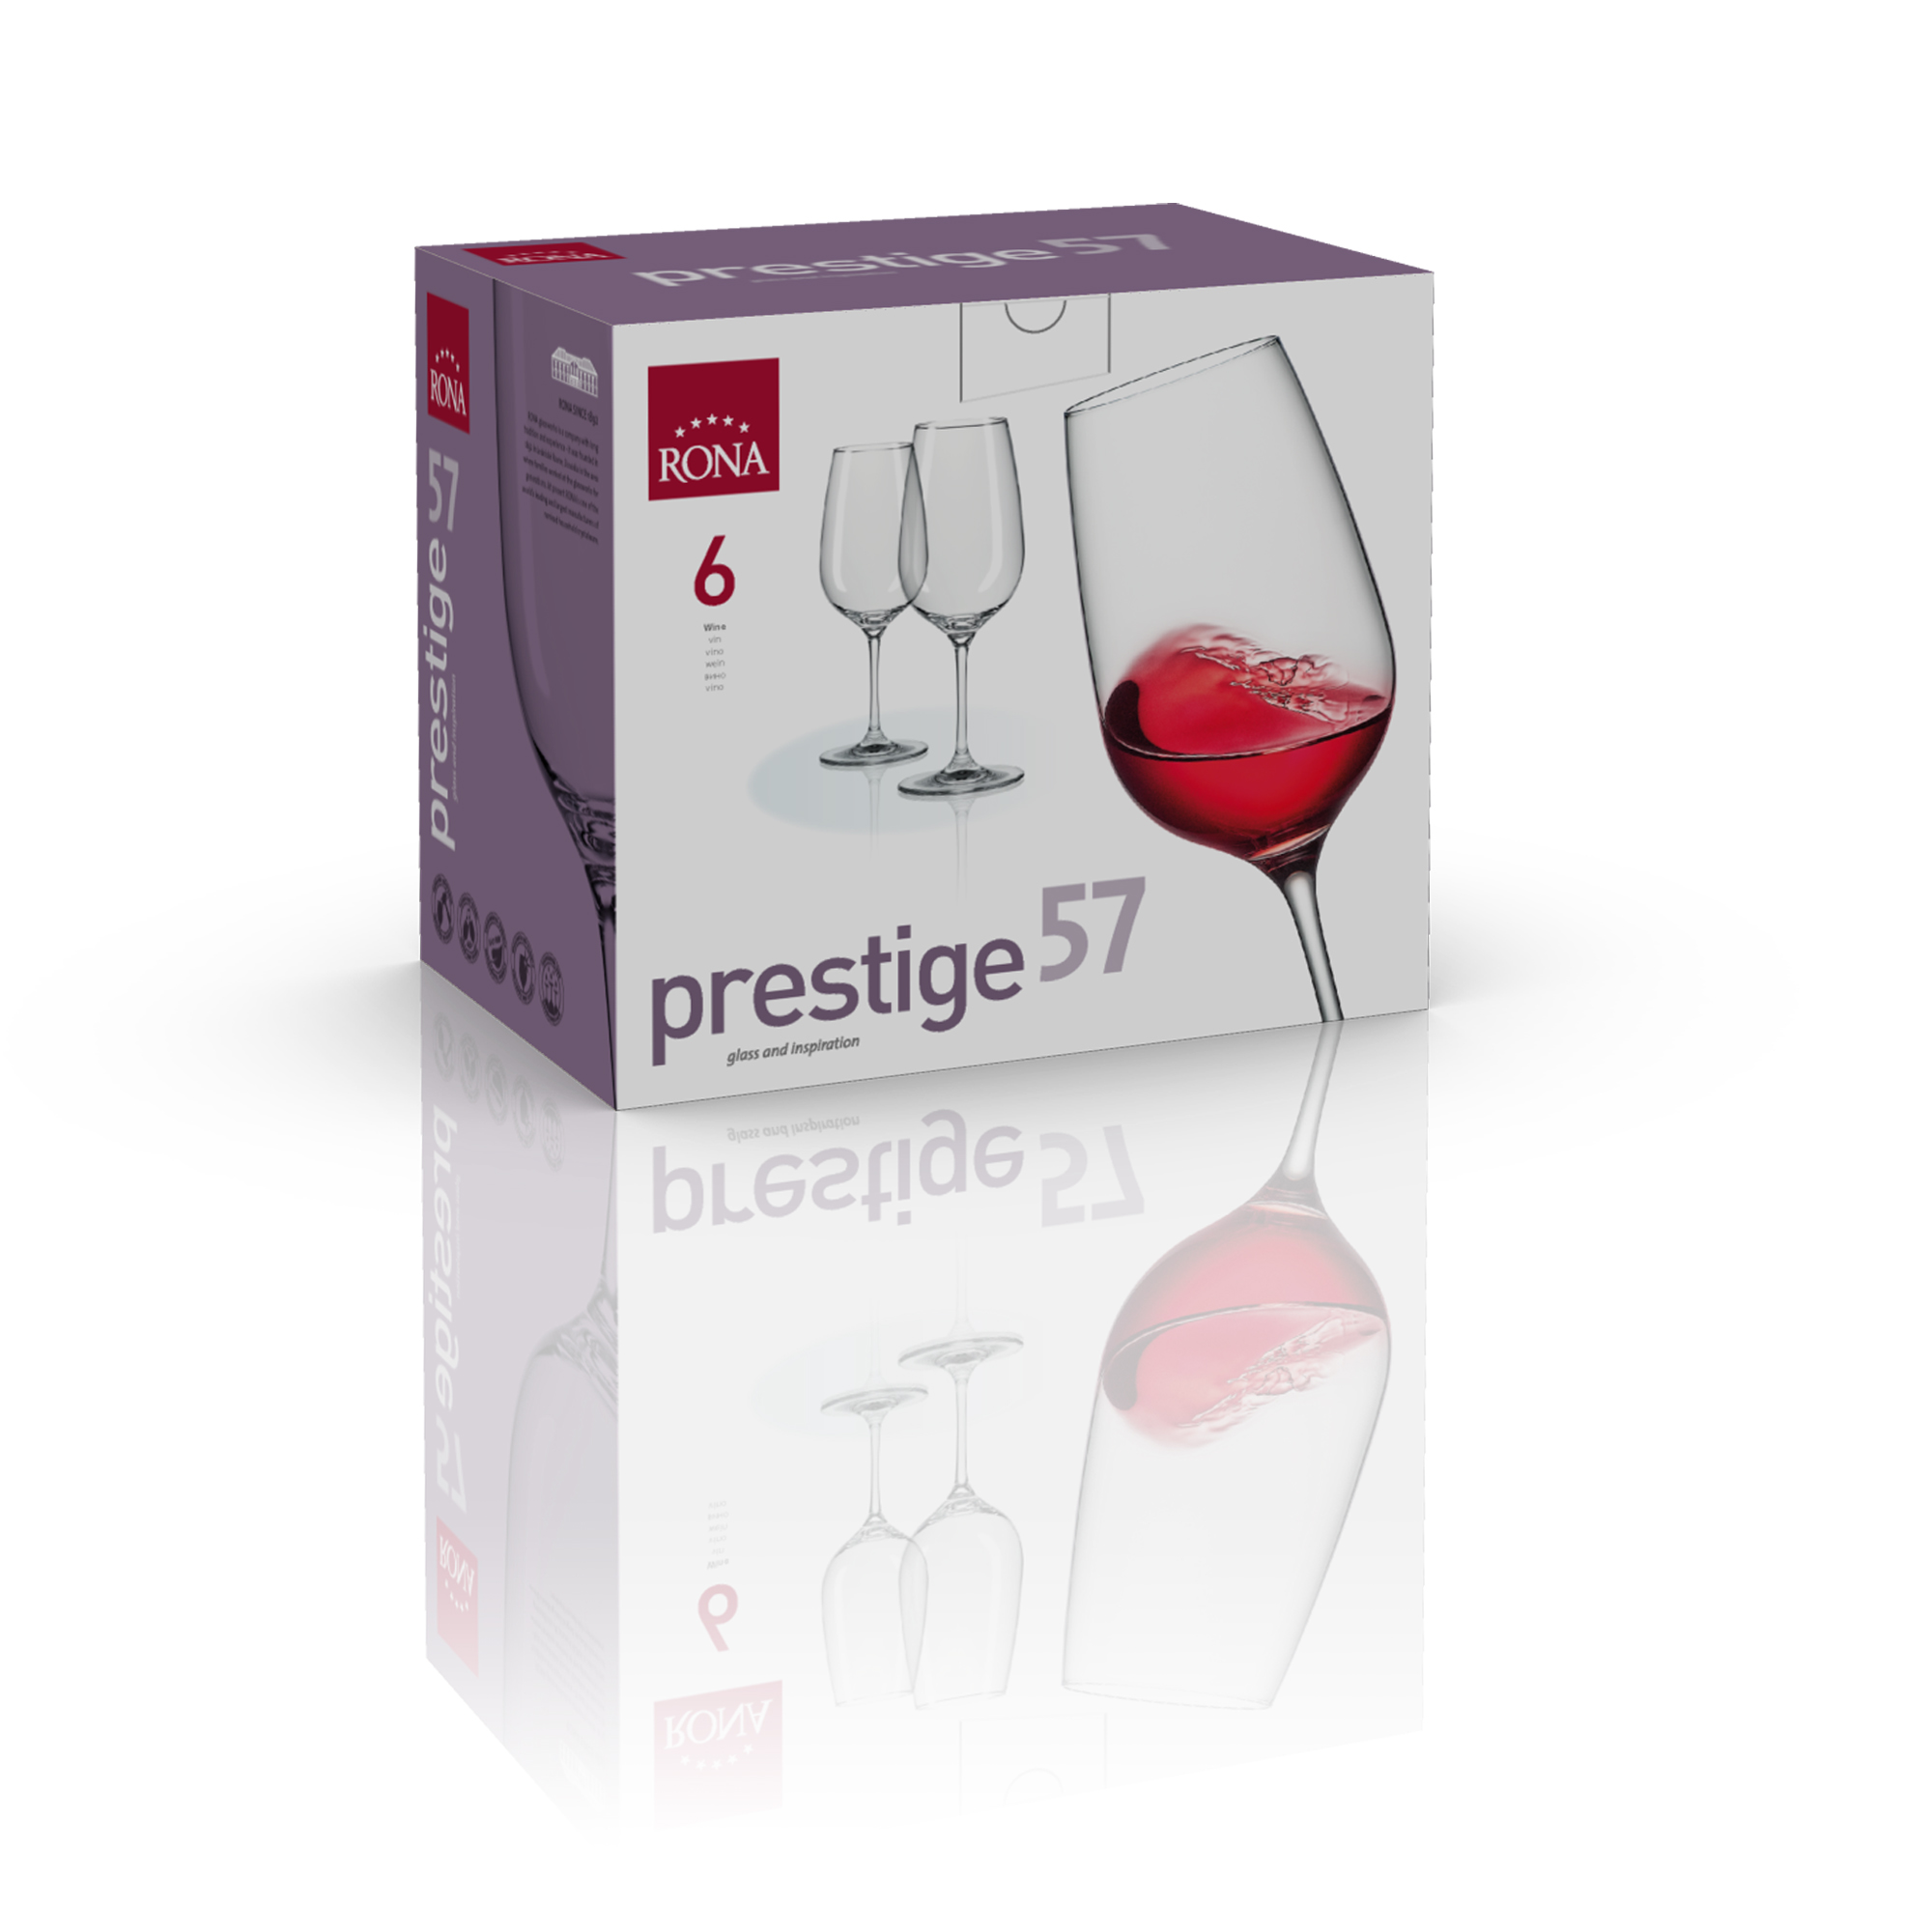 dash klippe fange RONA Prestige 57 Wine Glass - RONA USA